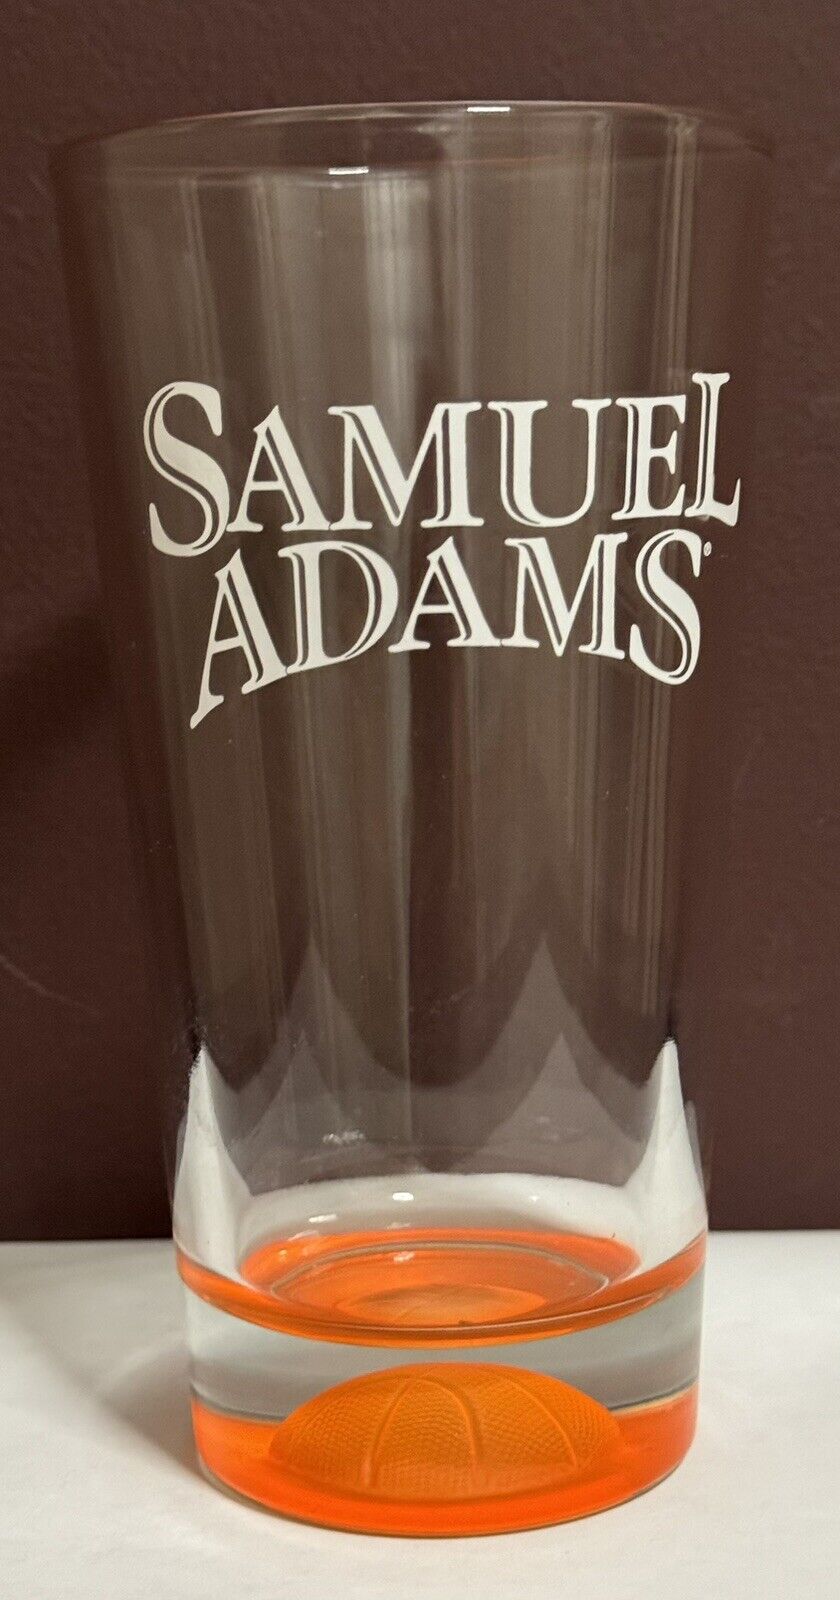 Samuel Sam Adams Beer Glass Basketball 3D Bottom Neon Orange 16 oz Pint Glass